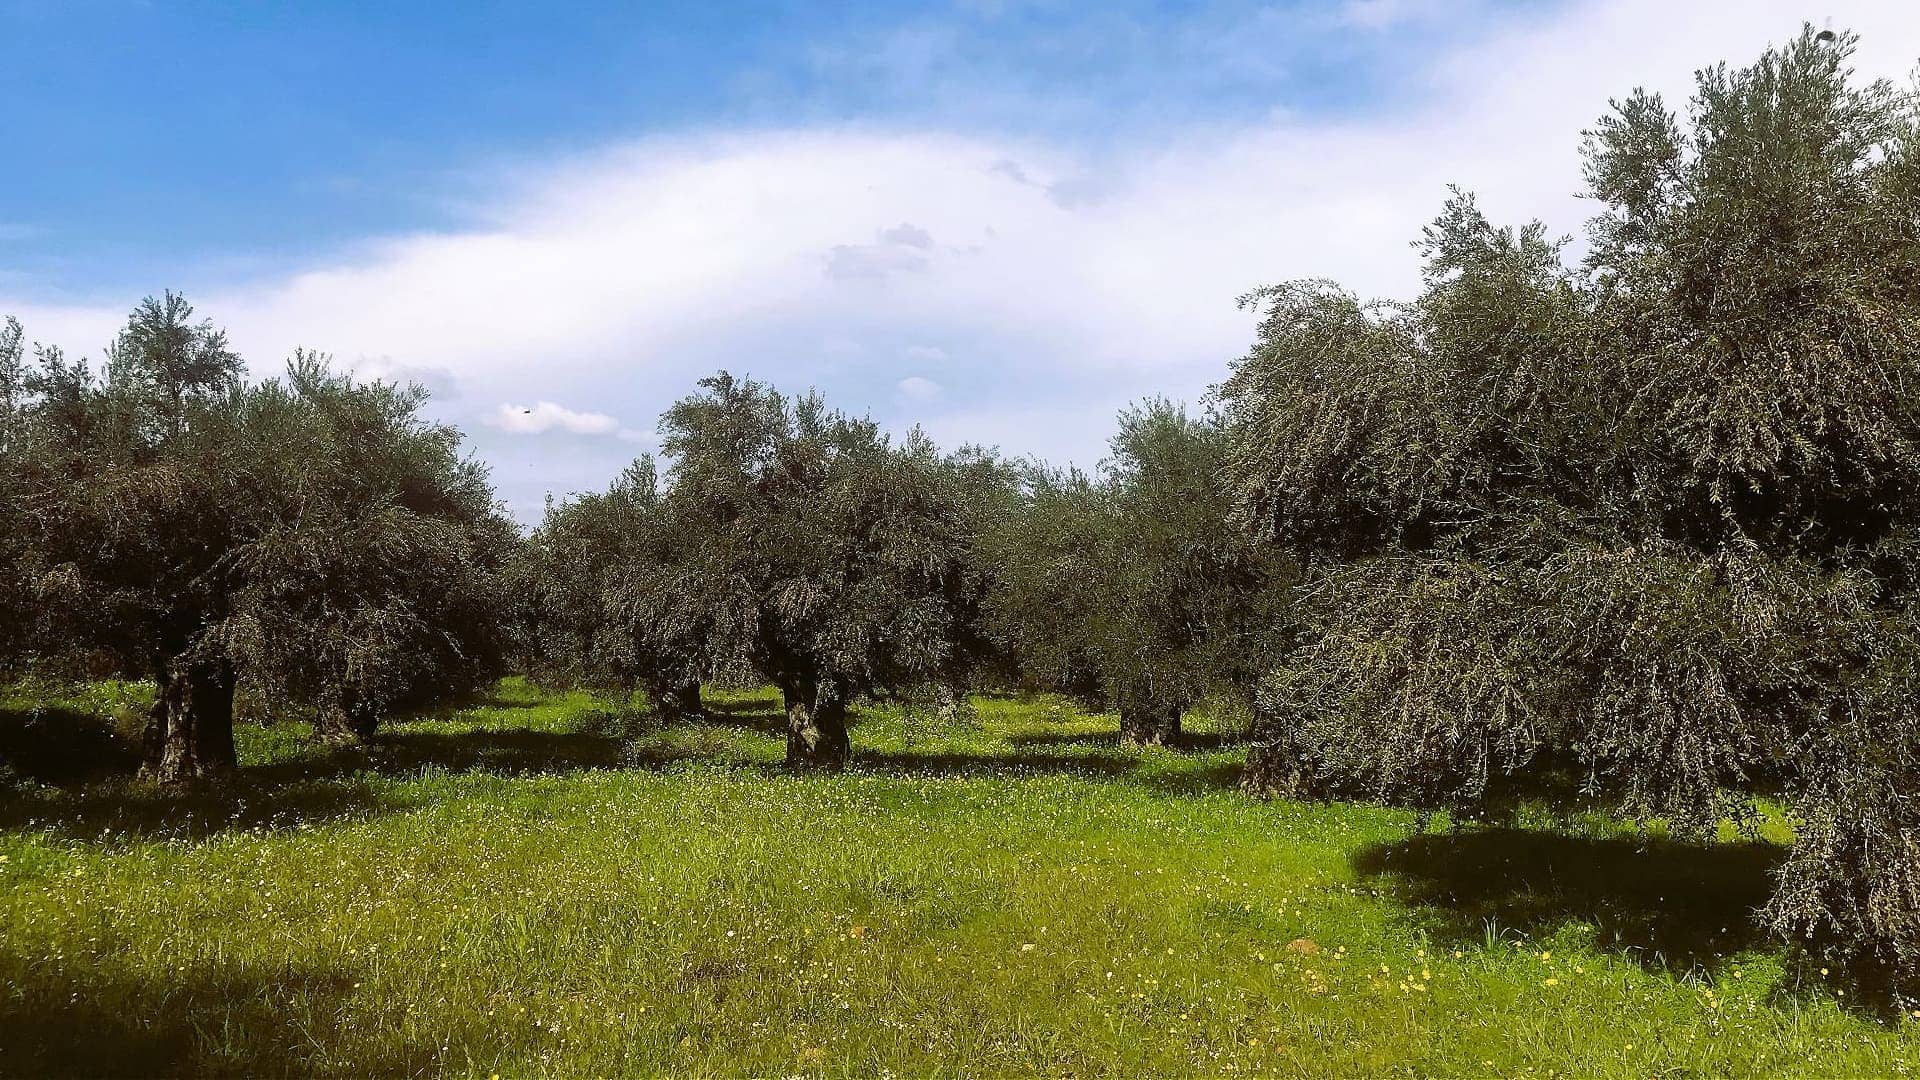 europe-profiles-the-best-olive-oils-production-отмеченный наградами-греческий производитель-looks-east-olive-oil-times